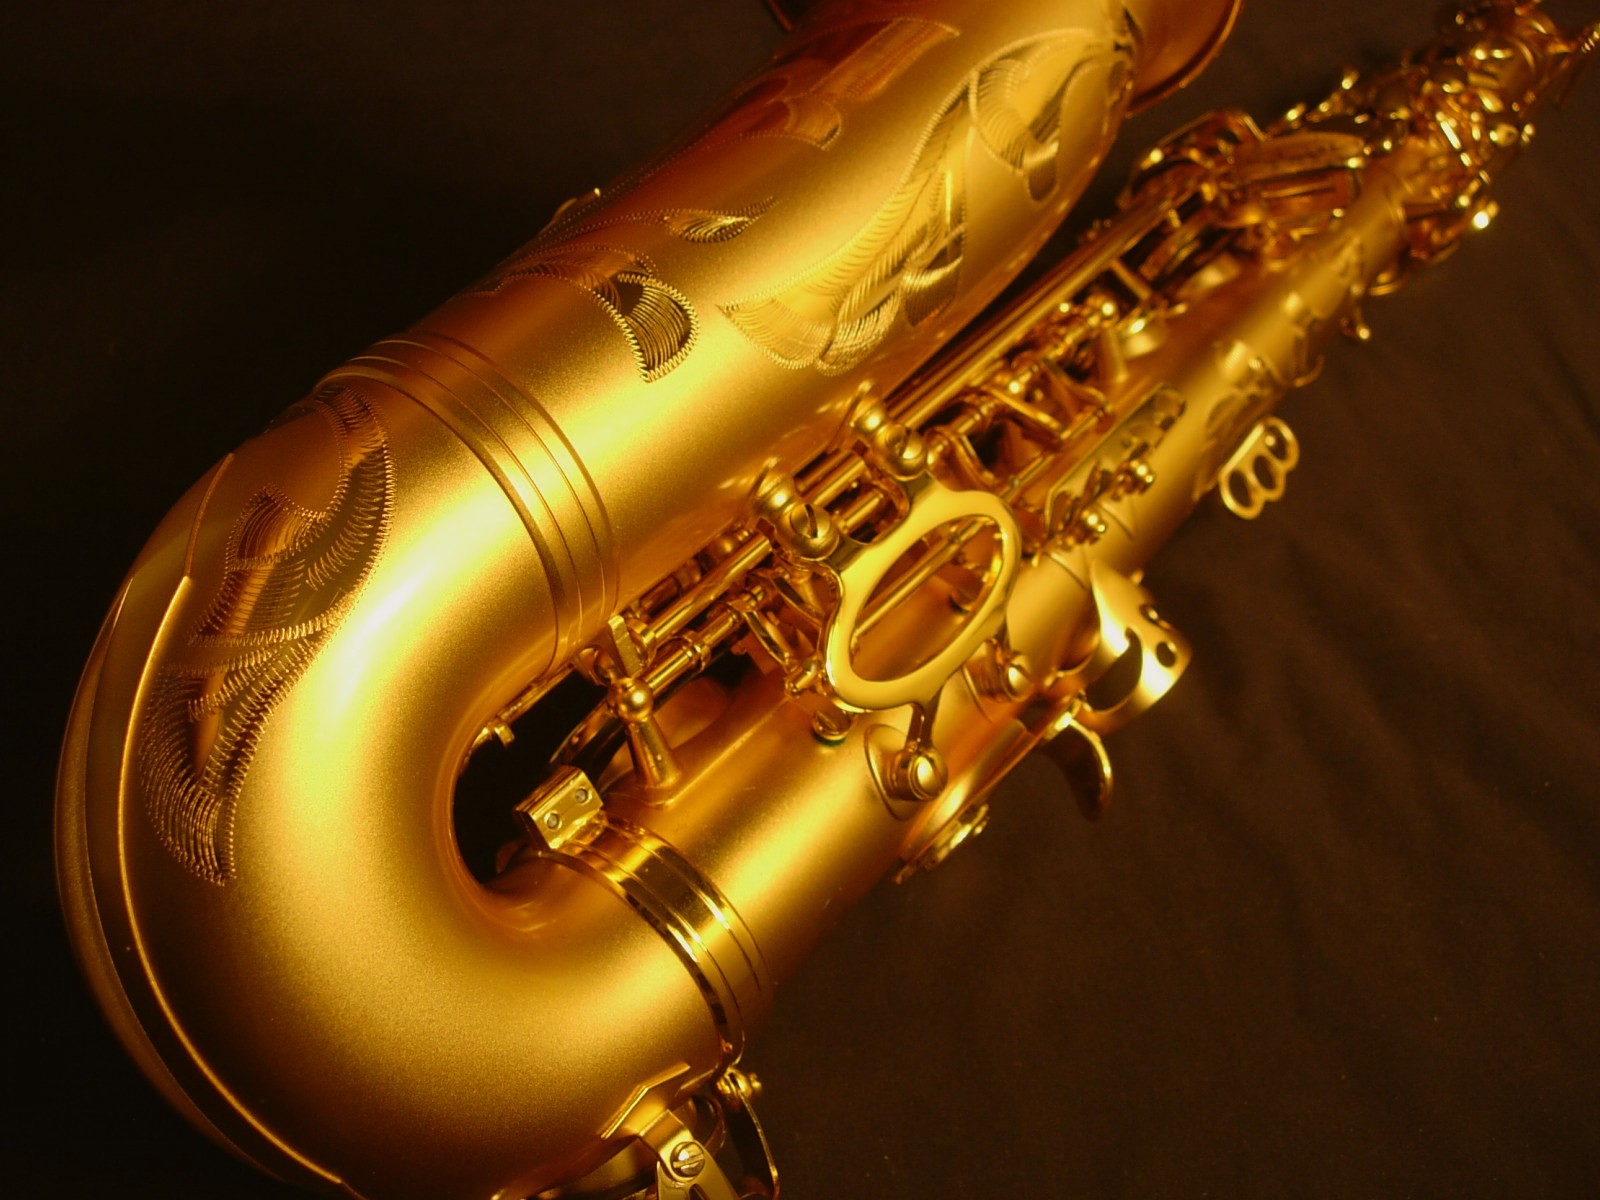 fond d'écran saxophone hd,instrument en laiton,instrument de musique,la musique,saxophone baryton,saxophone